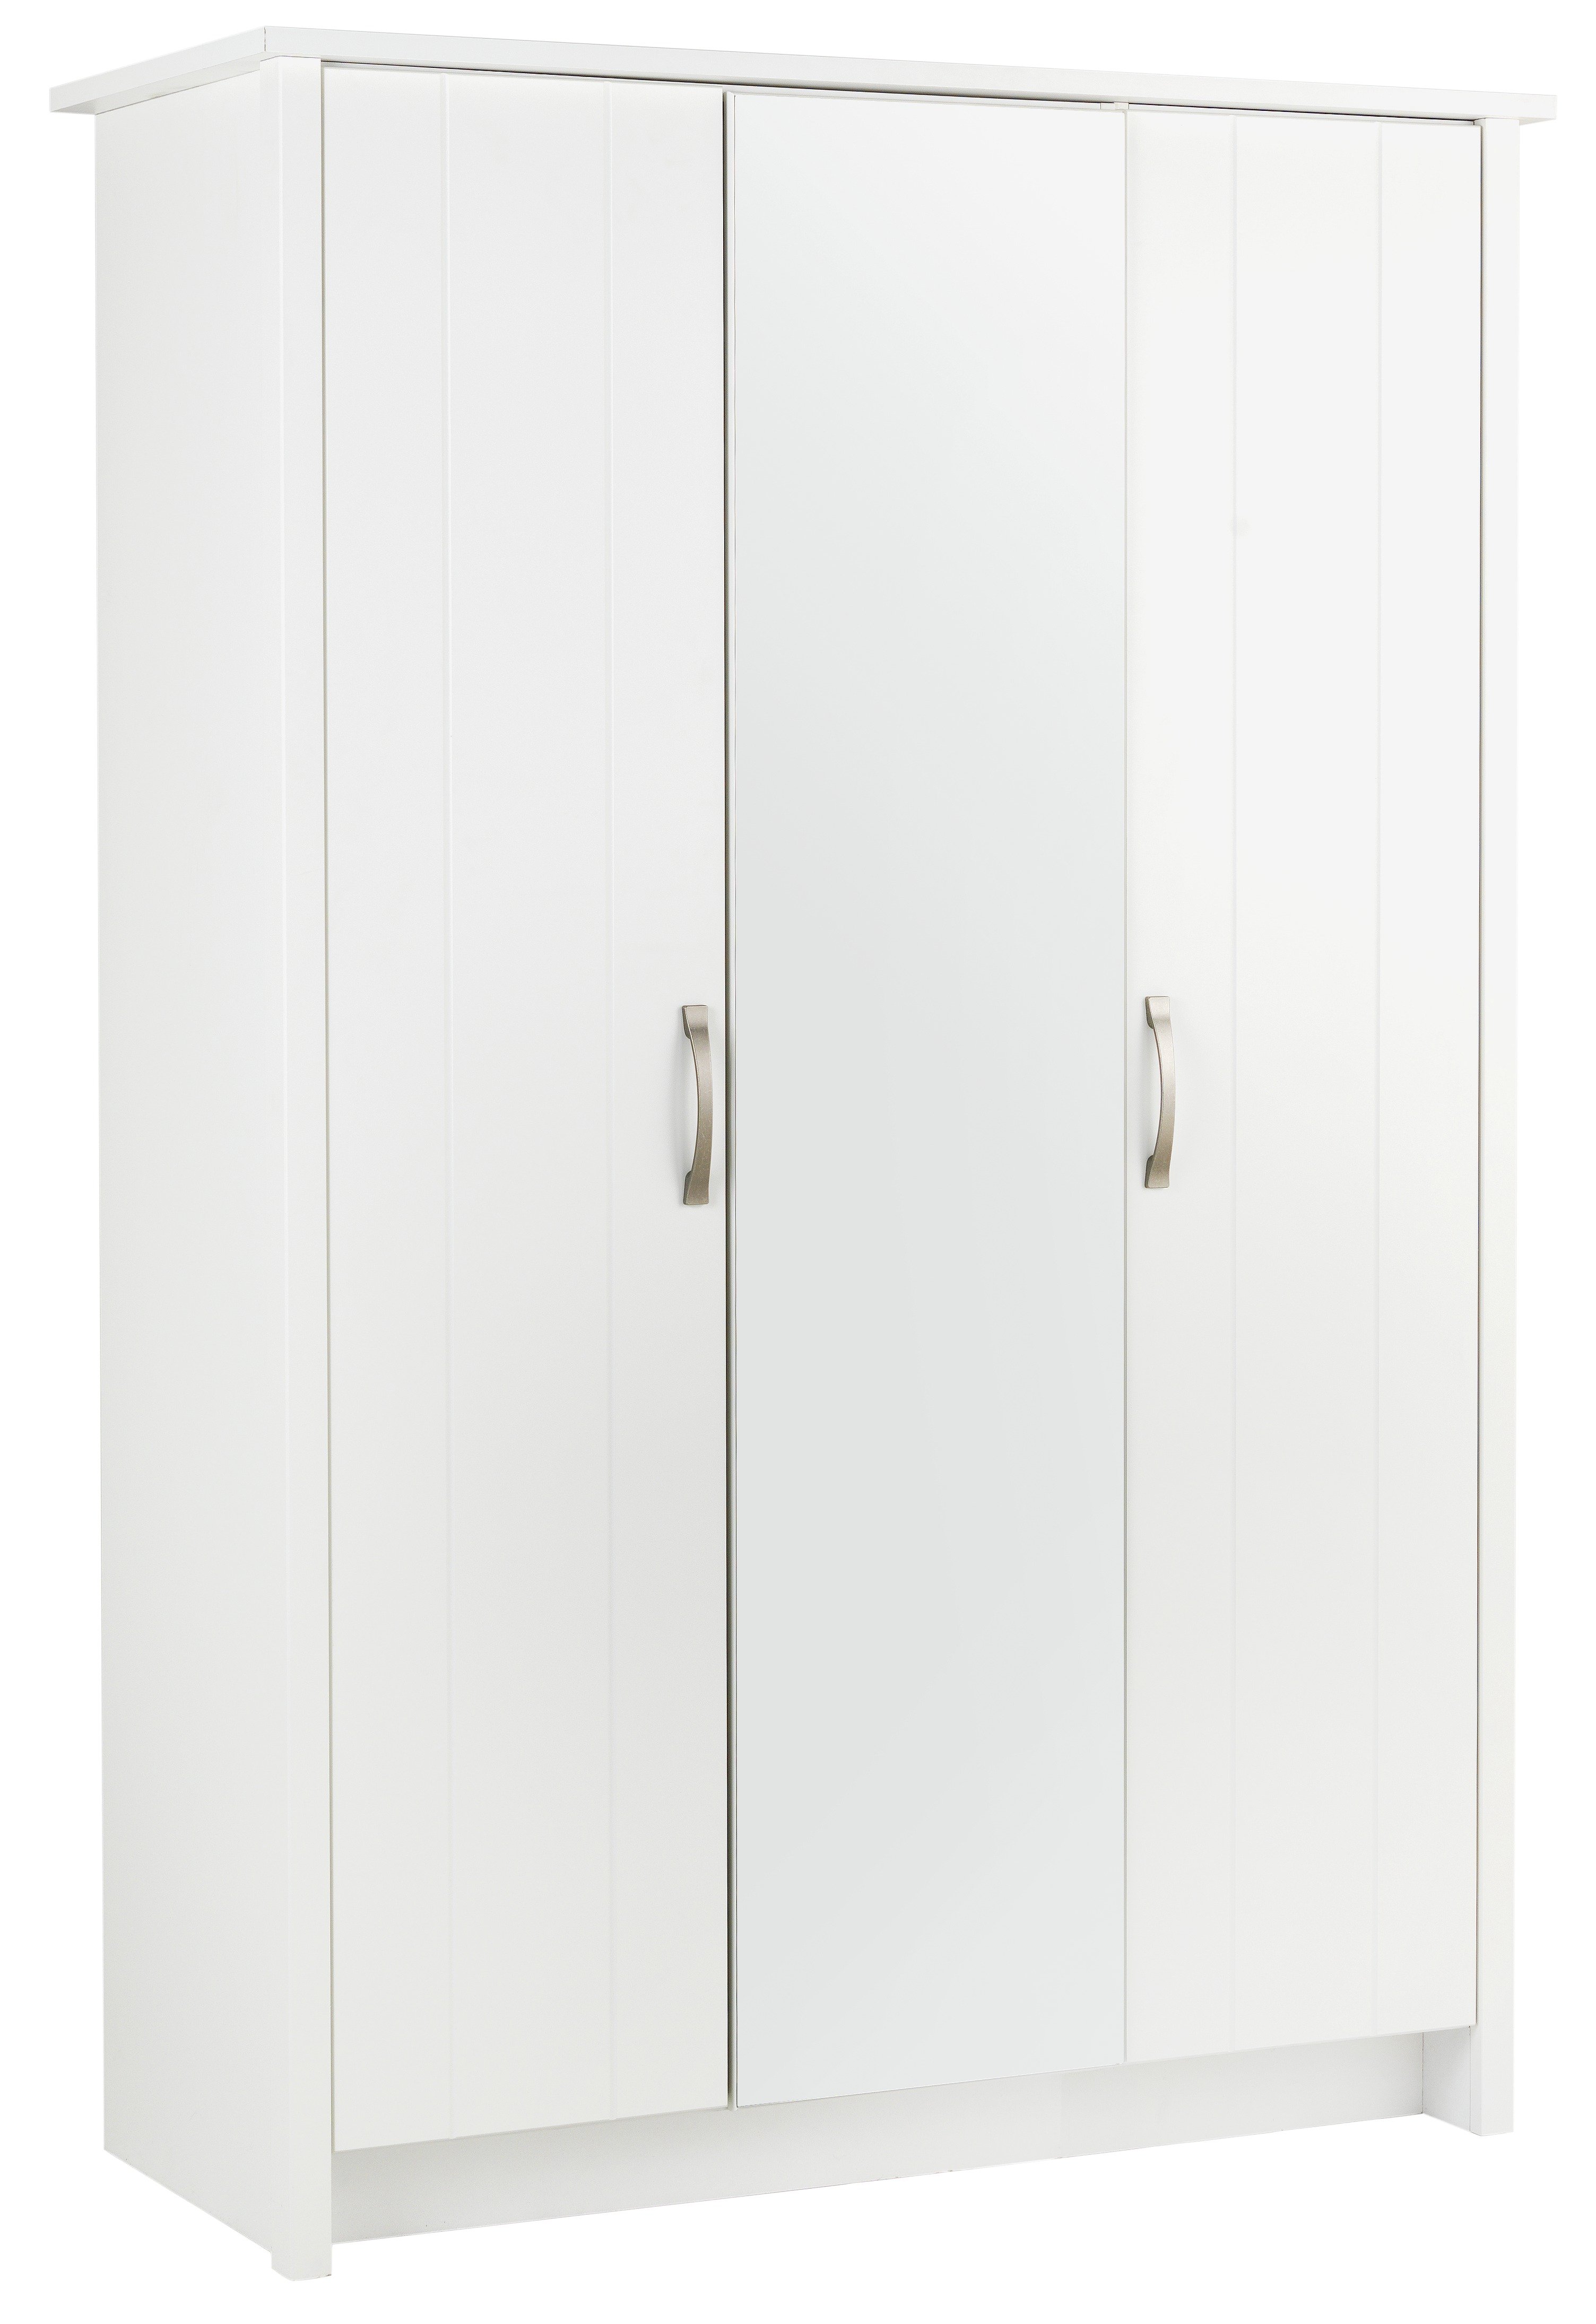 Collection Truro 3 Door Mirrored Wardrobe Review